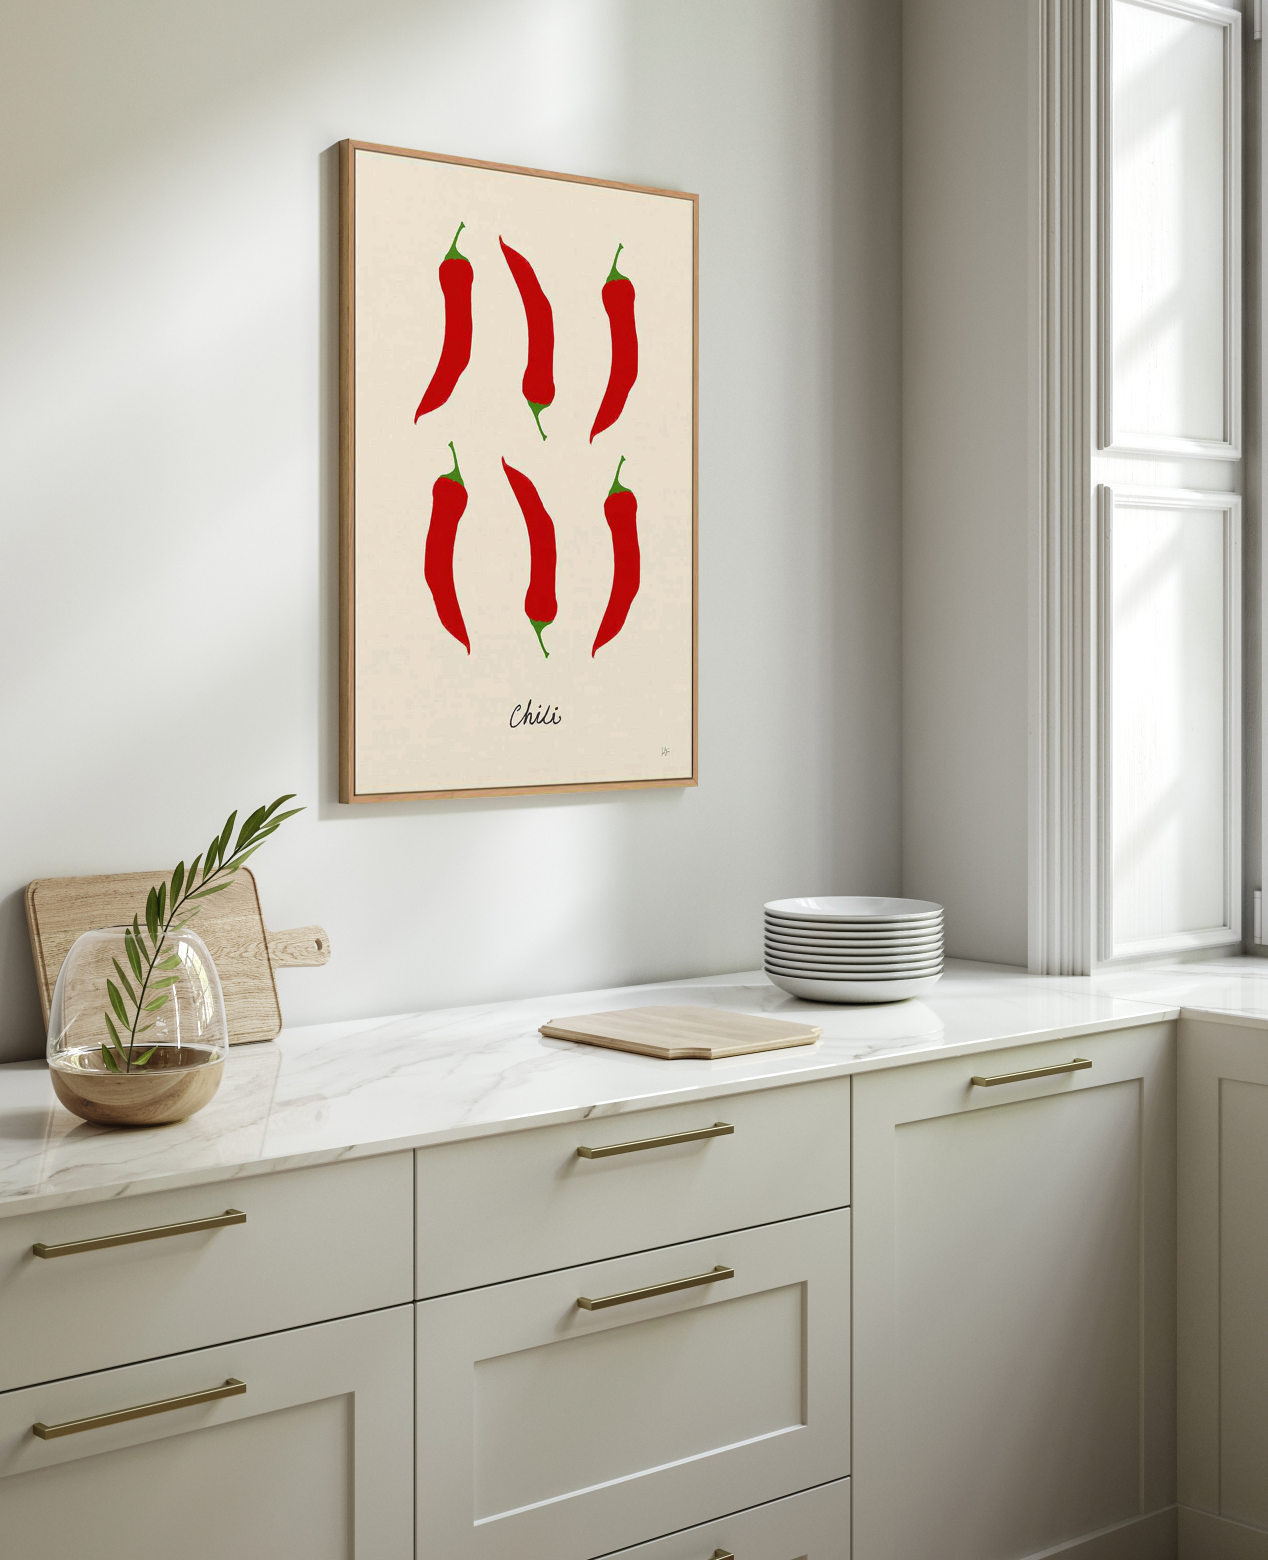 The elegant contemporary kitchen wall art